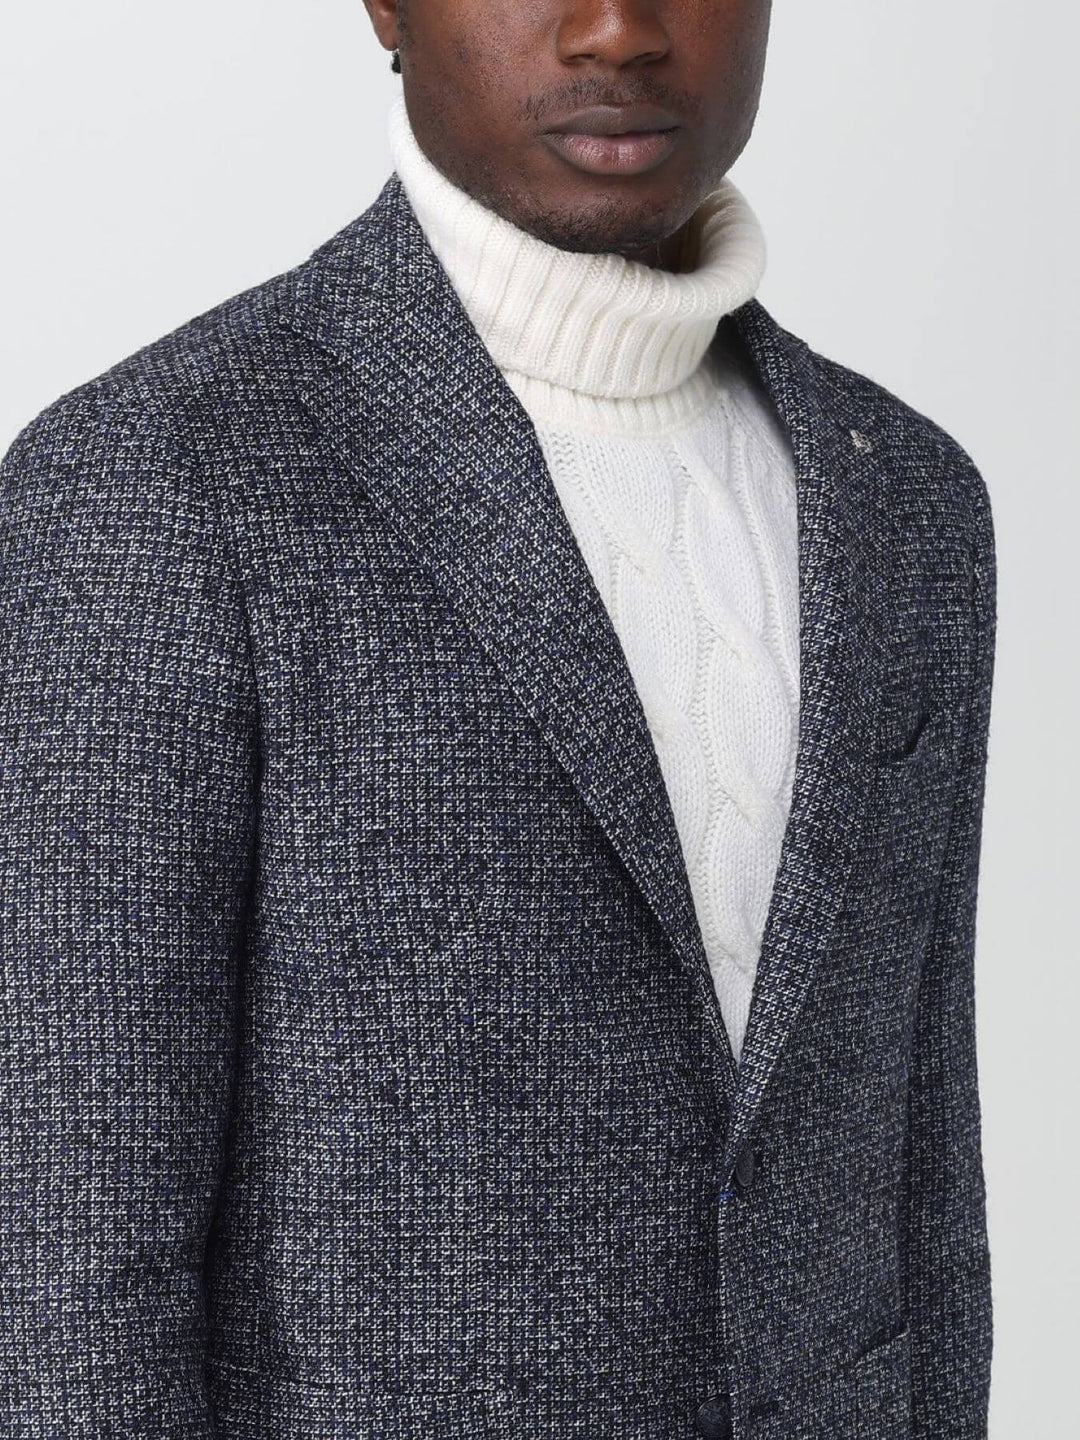 Textured wool jacket